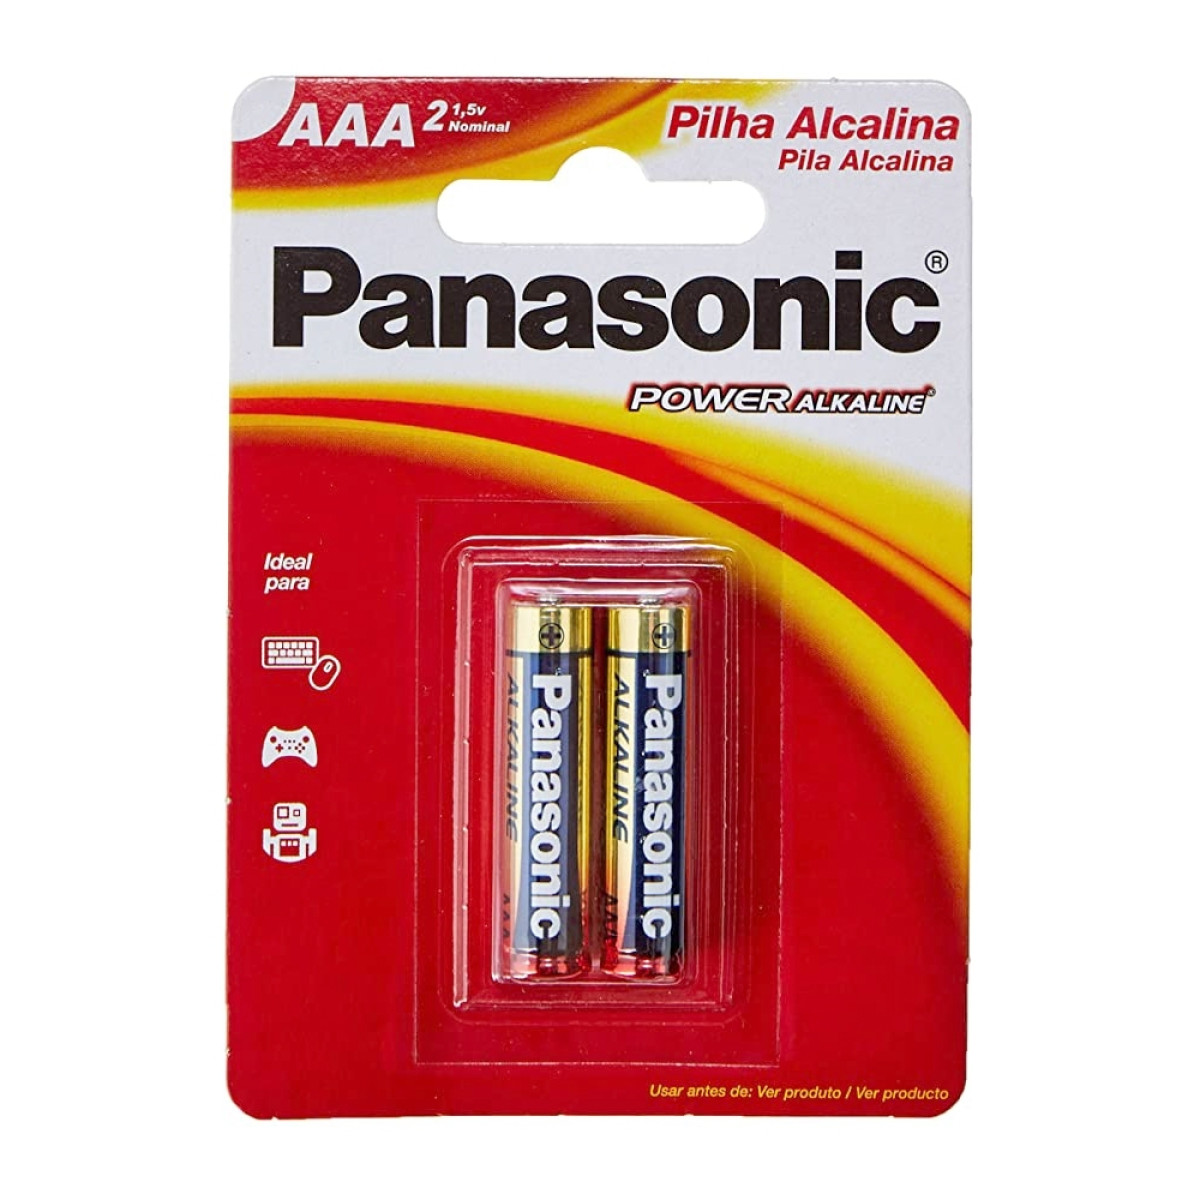 PANASONIC PILAS ALC AAA X 2